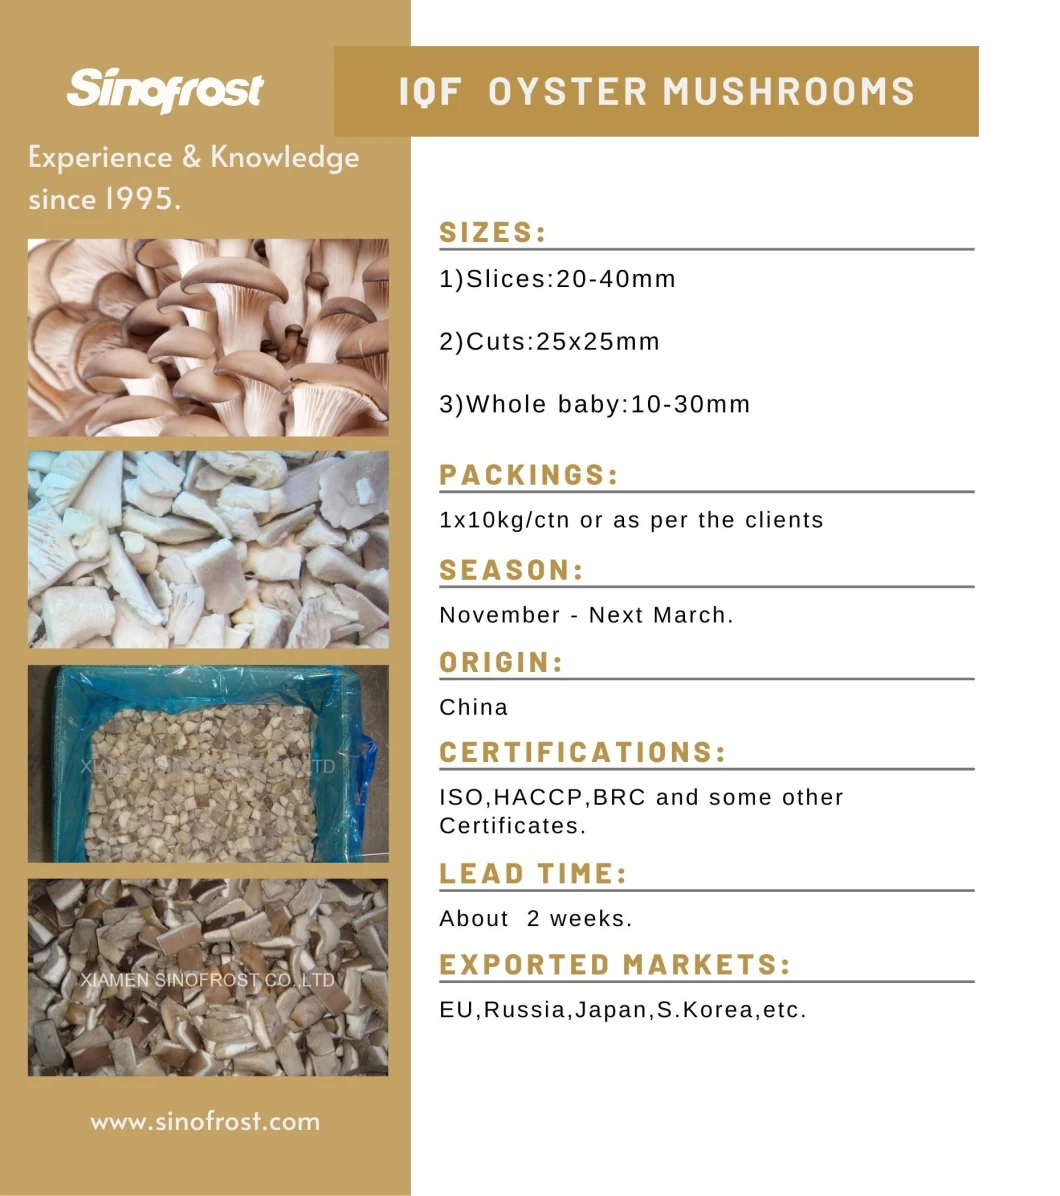 New Crop, IQF Nameko,Frozen Nameko Mushrooms,IQF Champignon,IQF Mushrooms,IQF Button Mushrooms (wholes/slices/cuts/dices) ,Shiitake,Oyster,Black Fungus,Nameko